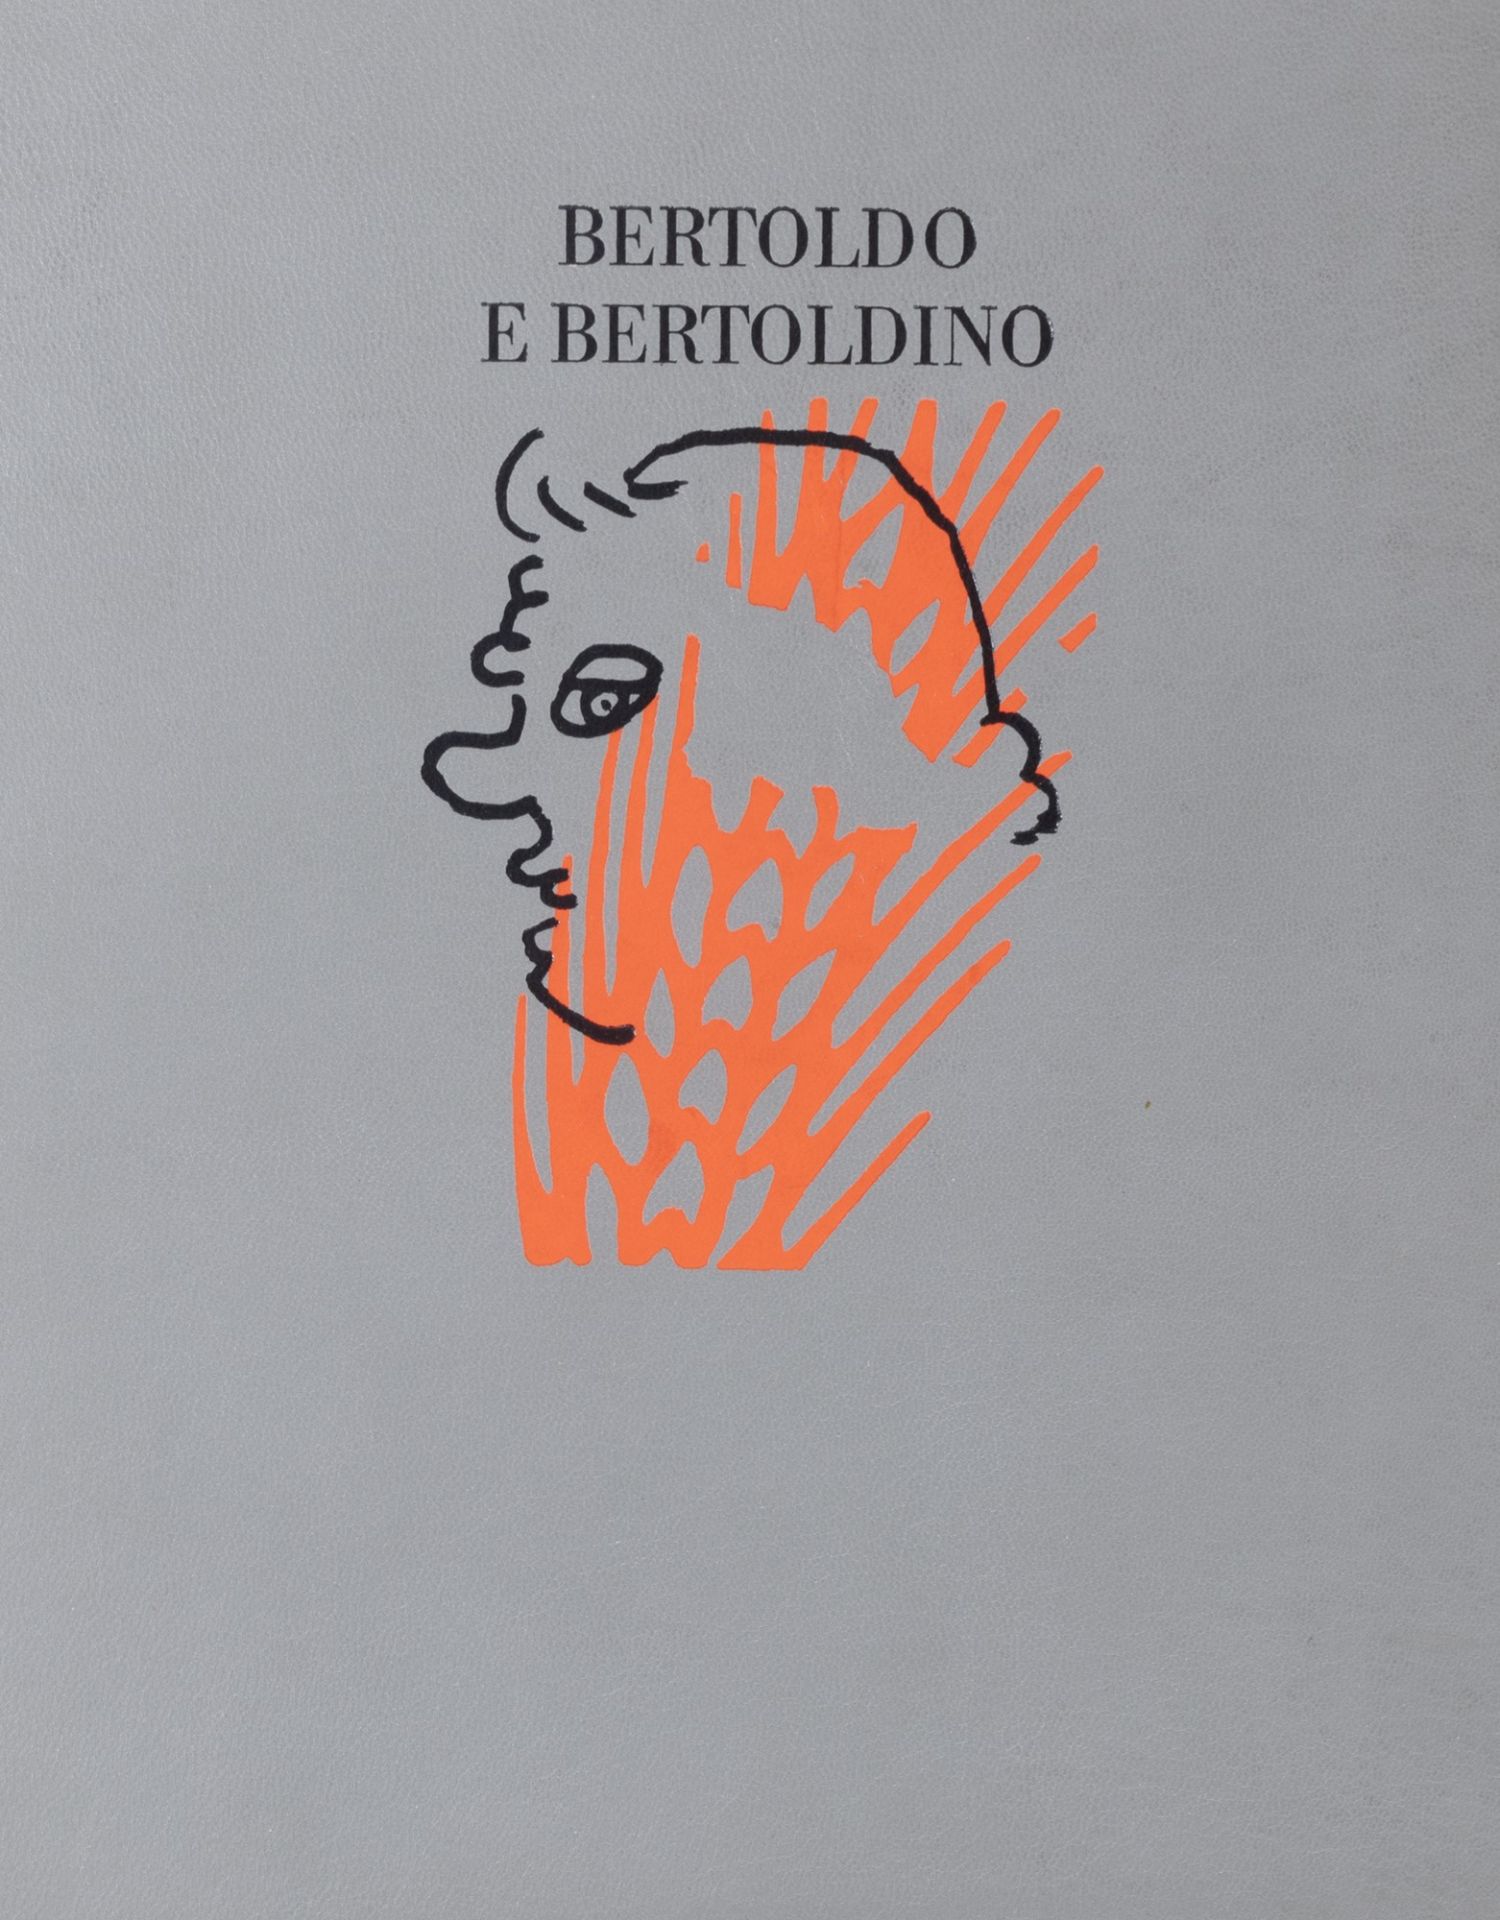 Croce, Giulio Cesare - Bertoldo and Bertoldino. with an essay by Alfredo Giuliani, images by Mimmo R